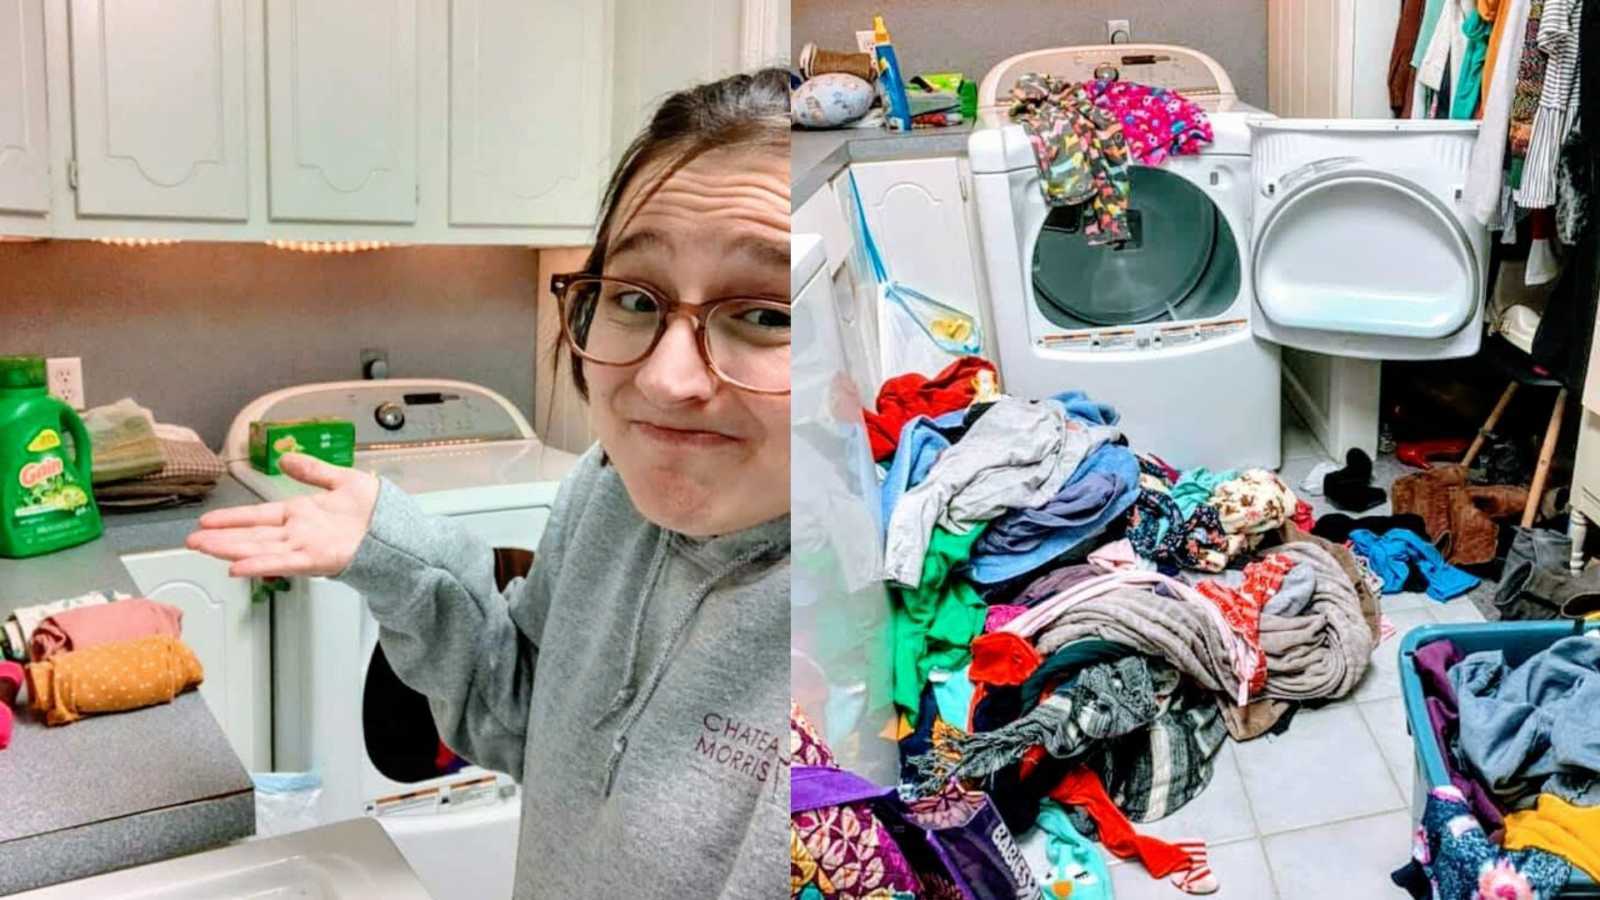 Piles of laundry surrounding open dryer machine